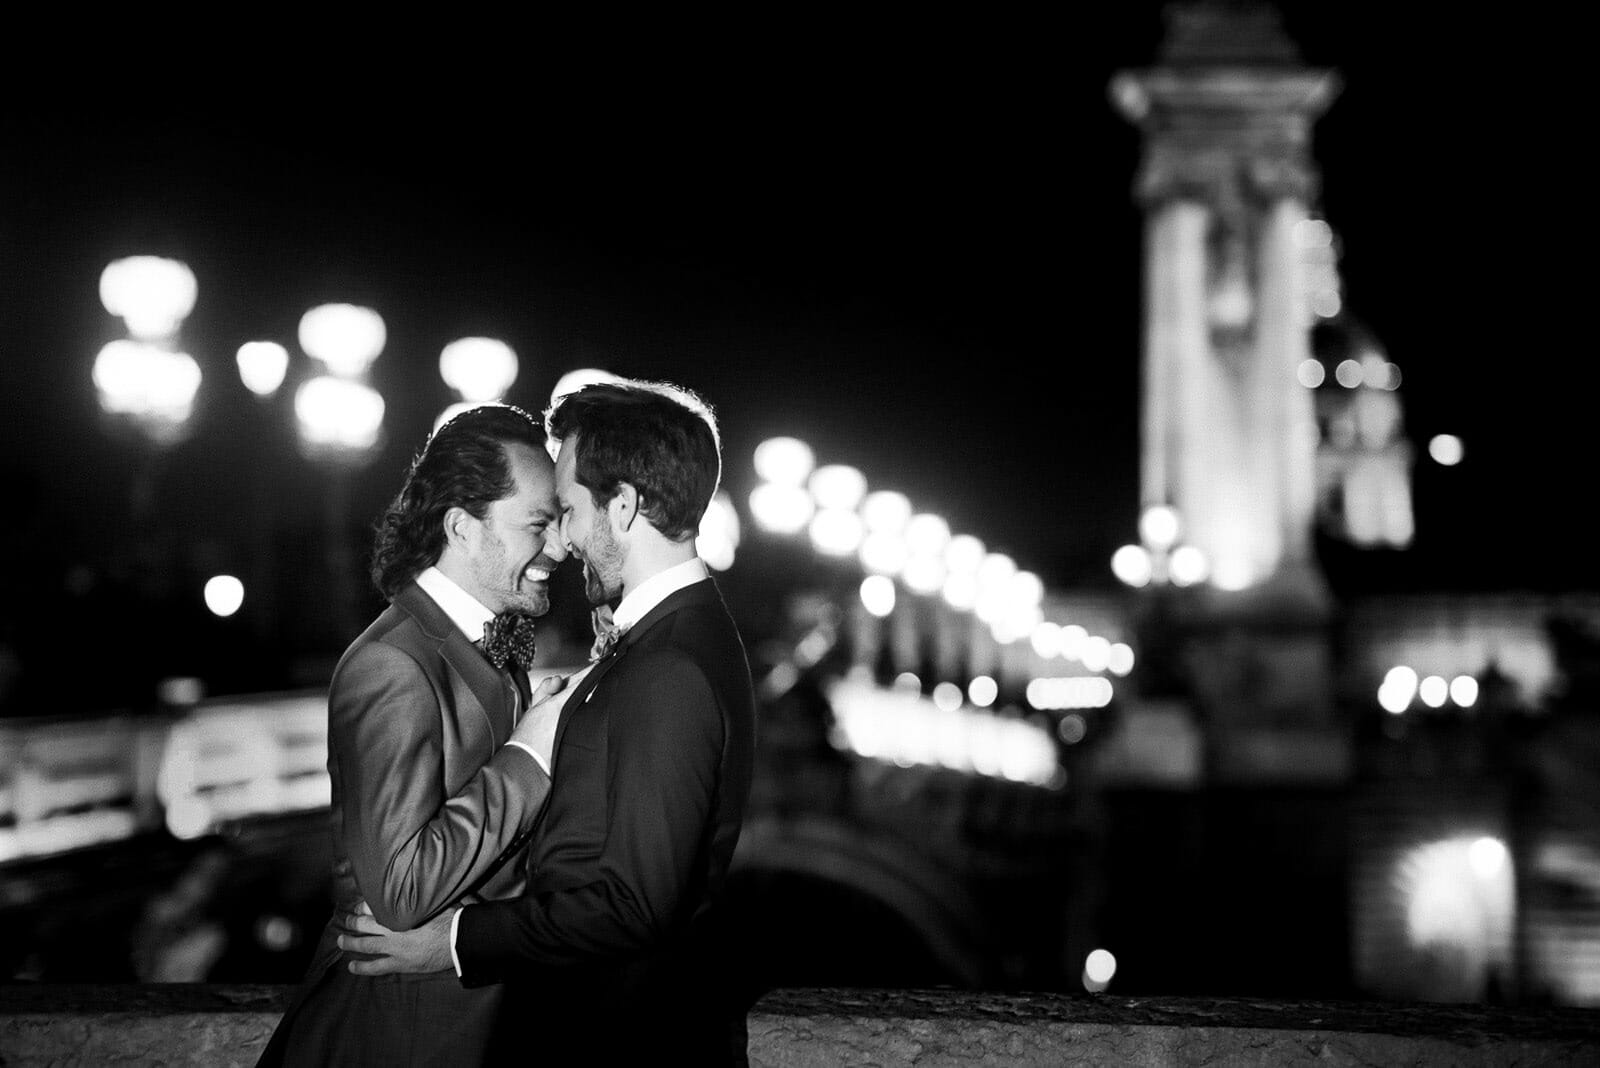 Romantic Paris couple photography by night on the Alexander III Bridge